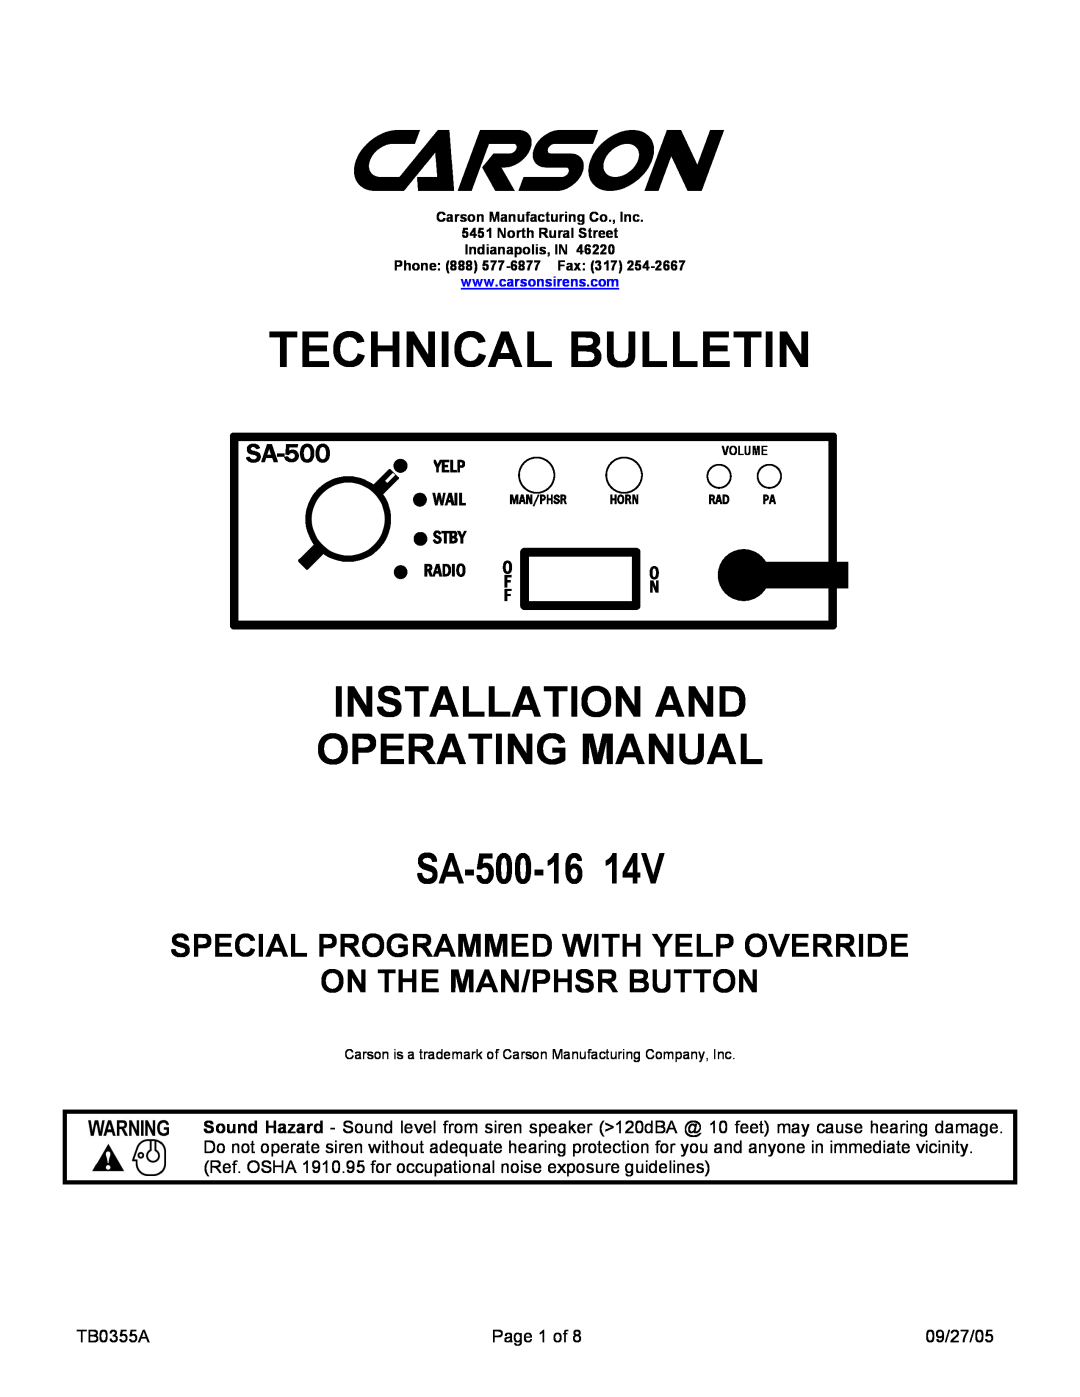 Carson SA-500-16 14V manual Technical Bulletin, INSTALLATION AND OPERATING MANUAL SA-500-1614V, On The Man/Phsr Button 